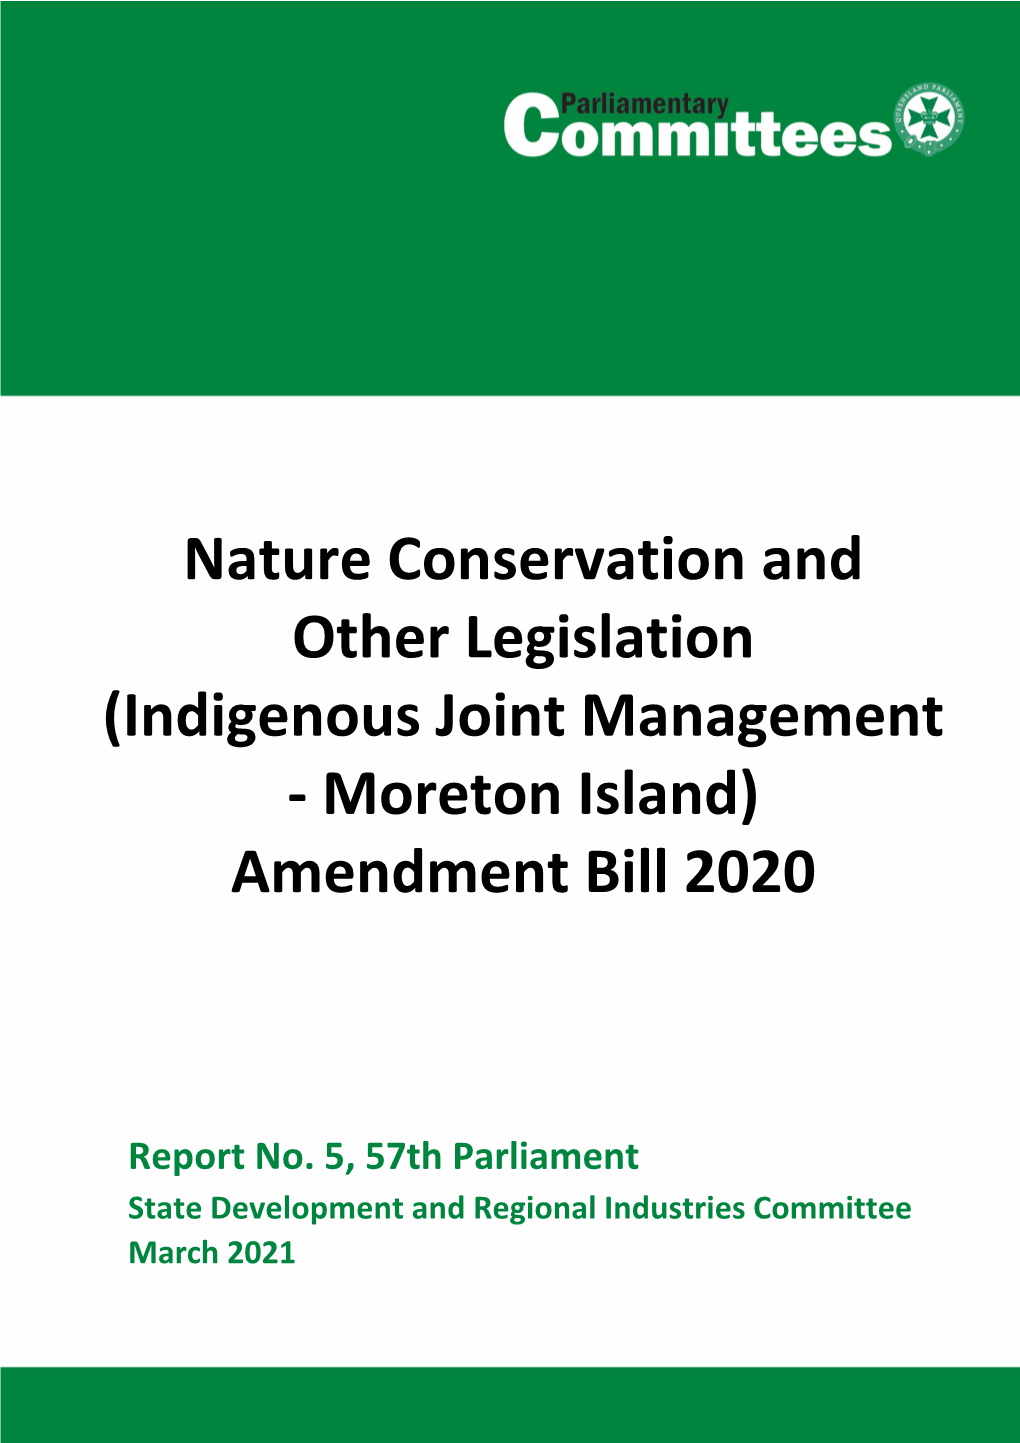 (Indigenous Joint Management - Moreton Island) Amendment Bill 2020